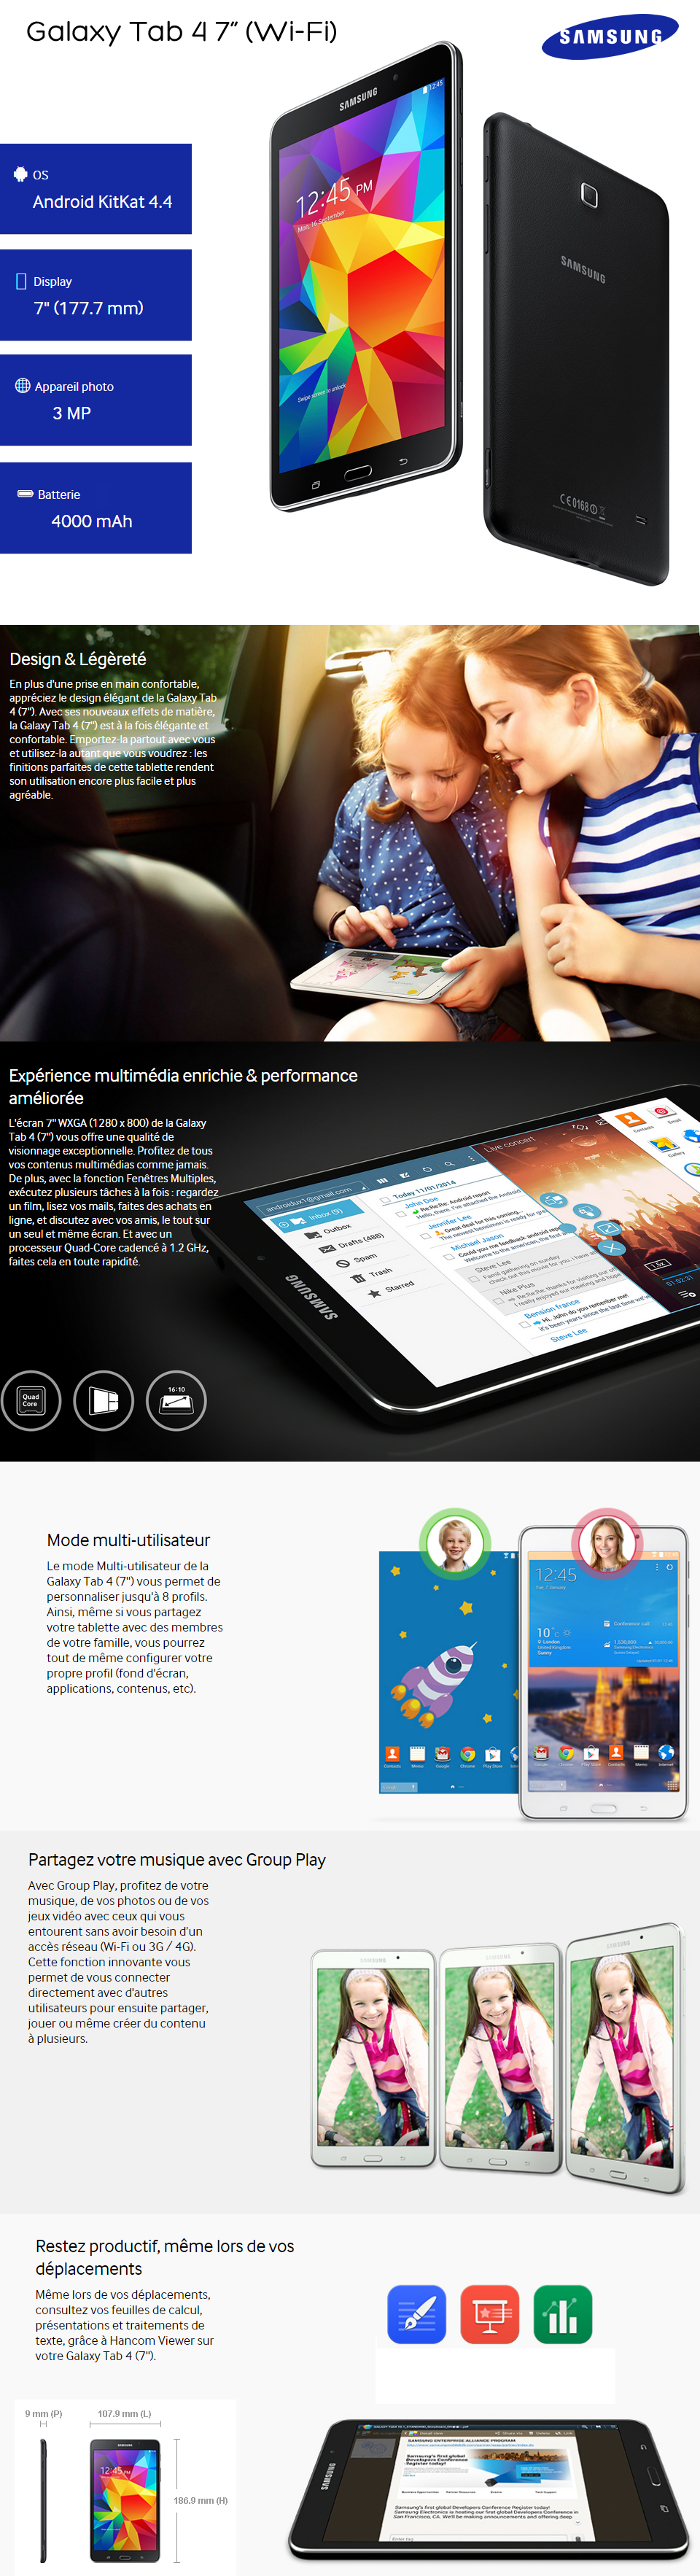 Acheter Tablette Samsung Galaxy Tab 4 7.0 Maroc